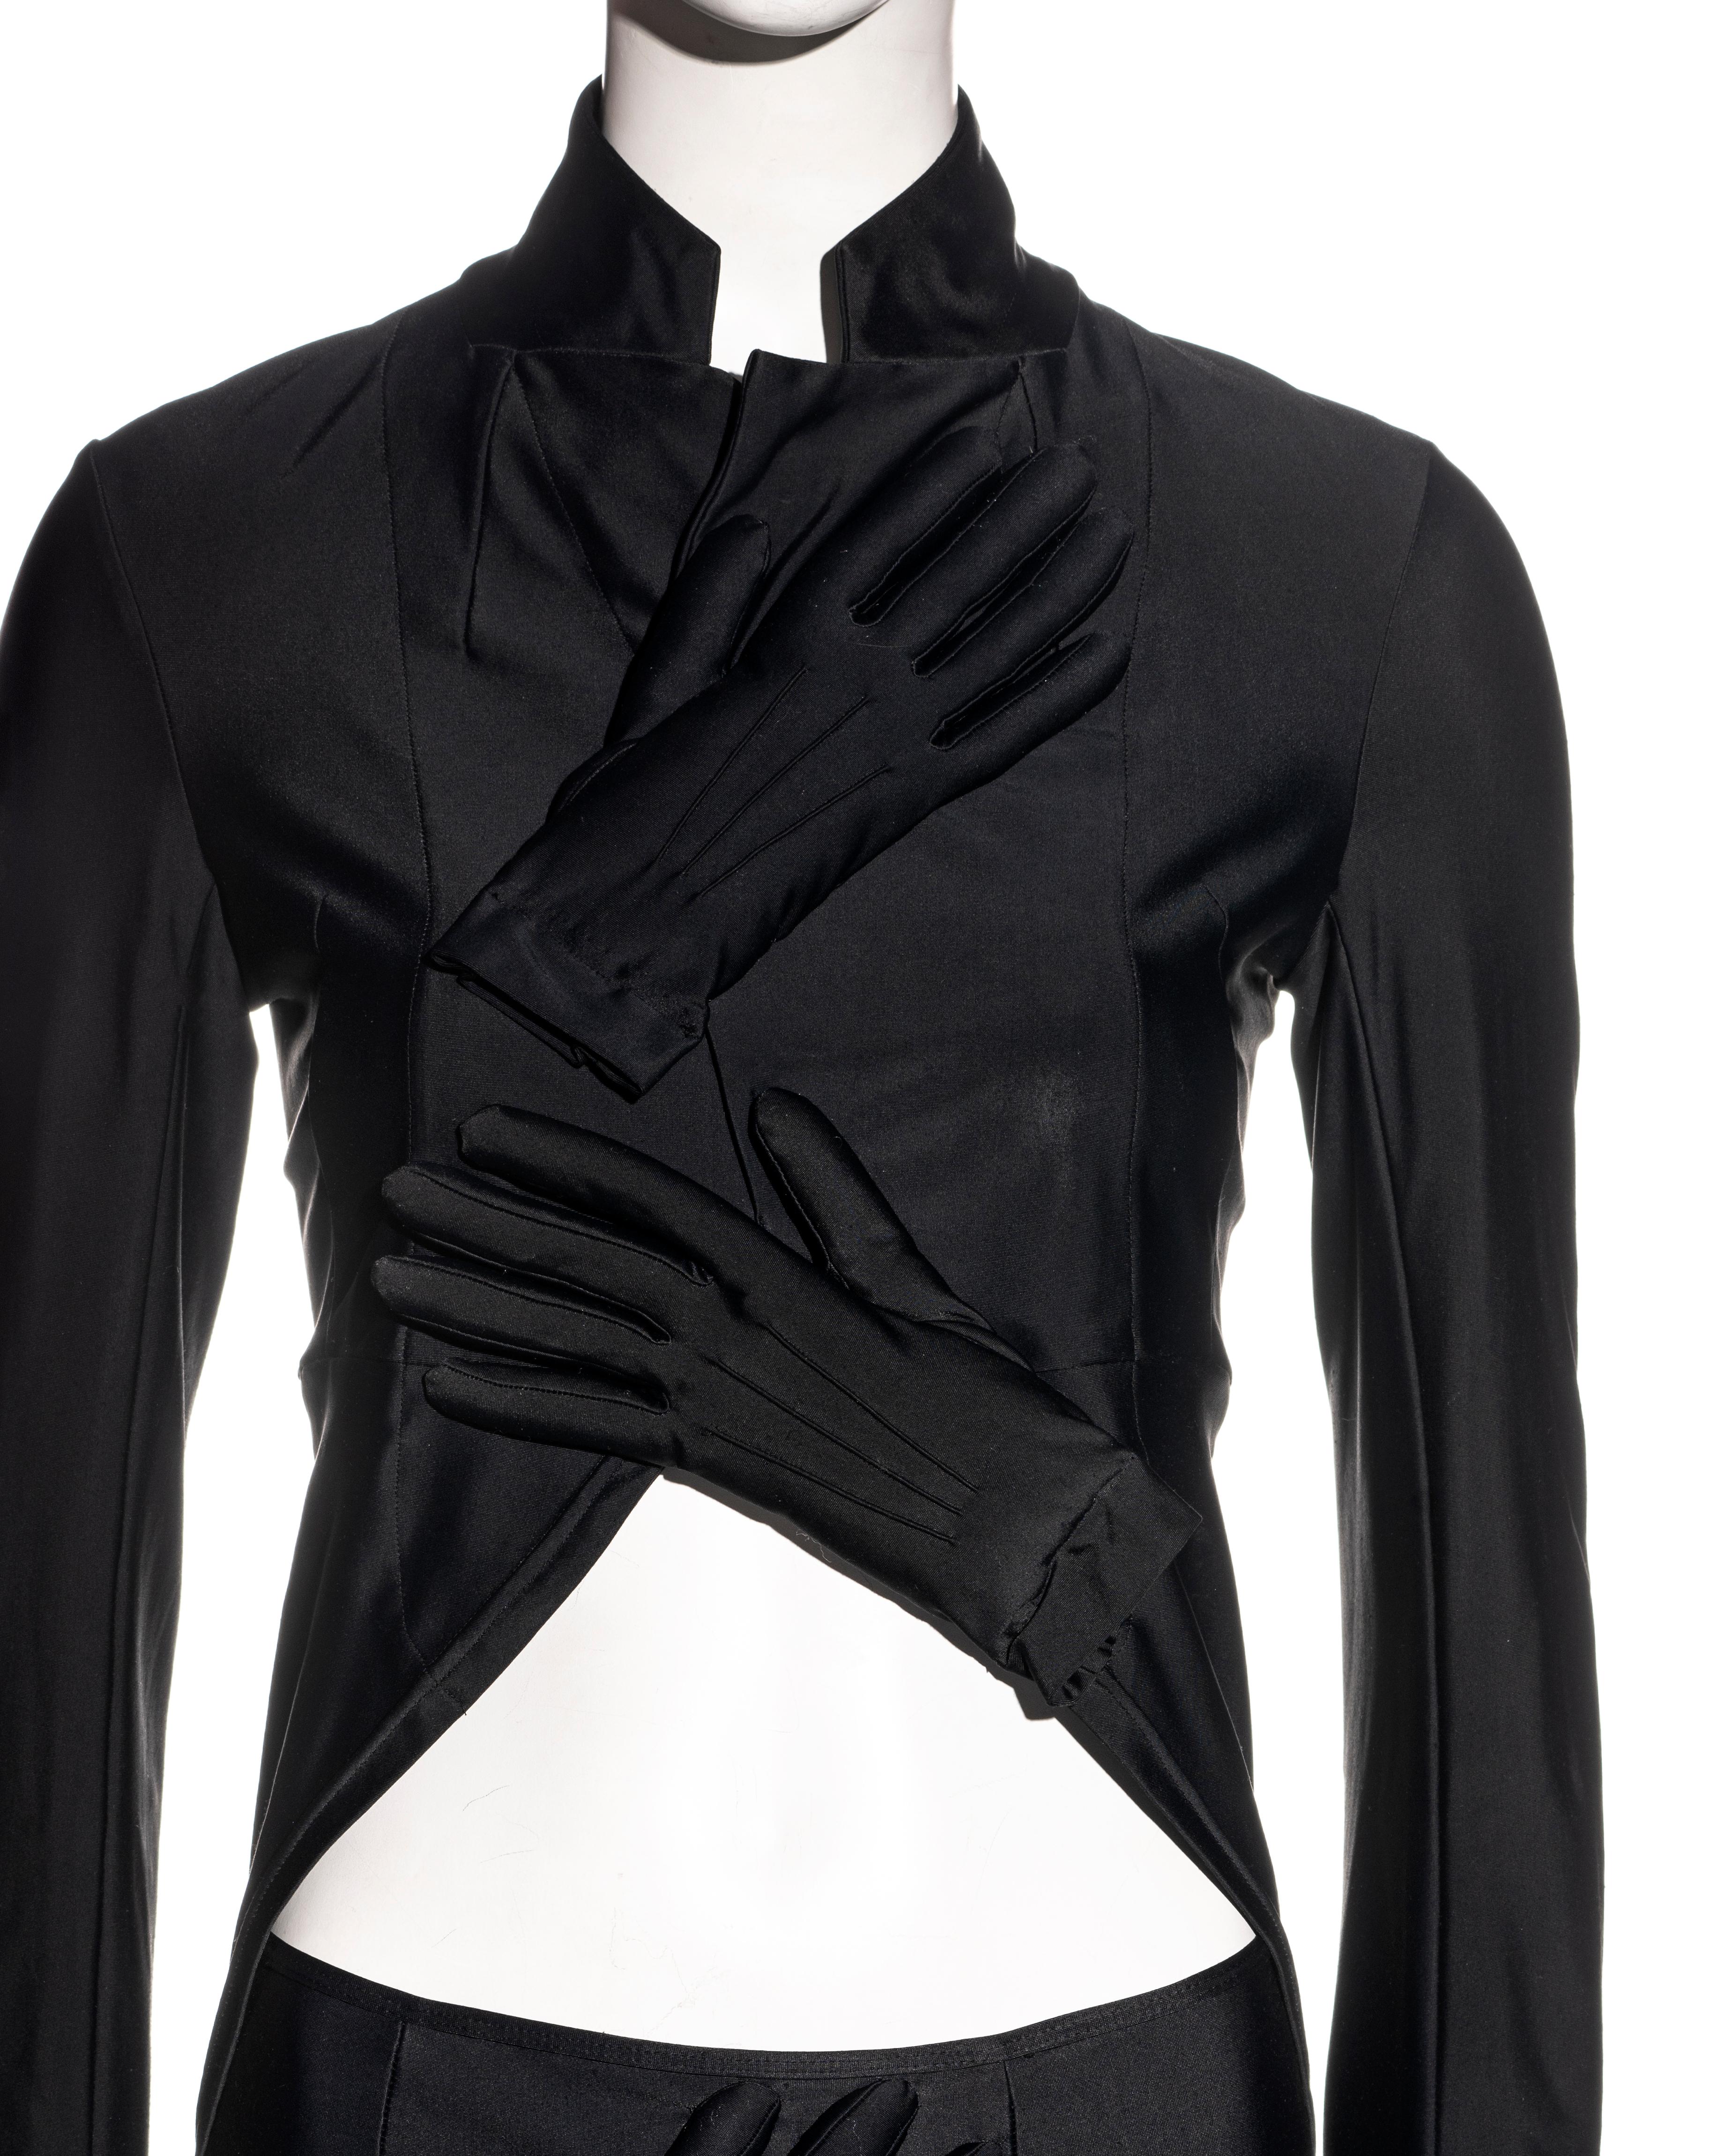 Black Comme des Garçons black lycra jacket and pants with padded hand motifs, fw 2007